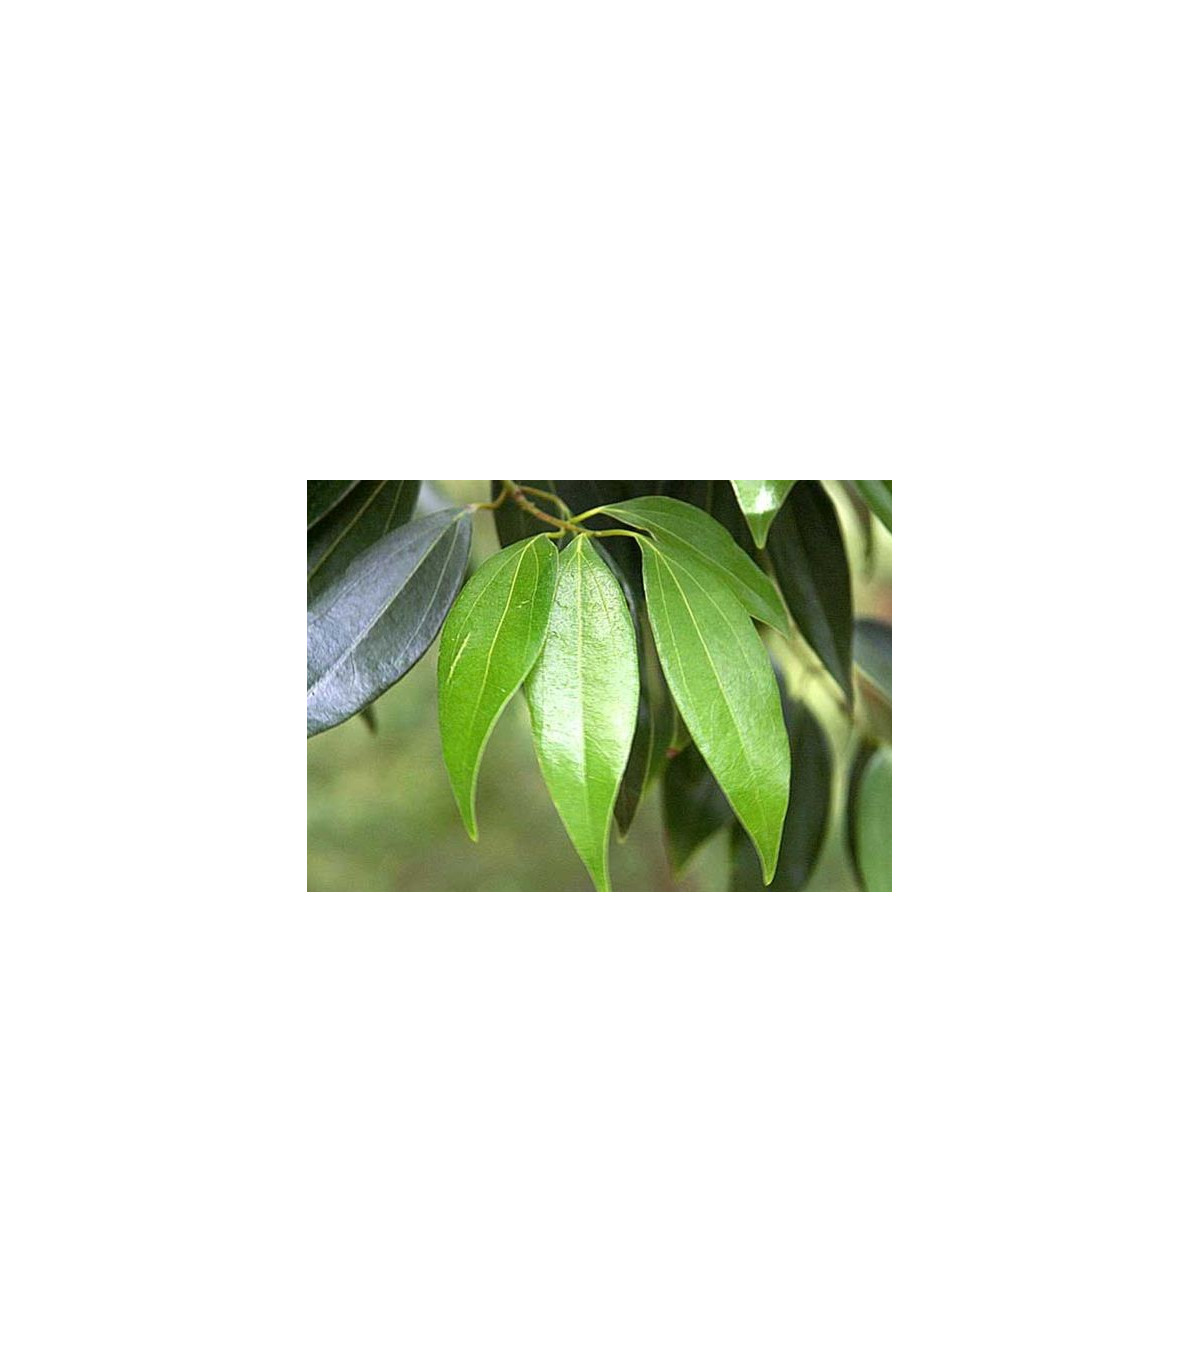 Gáfrovník lekársky - Škoricovník Gáfrovník - Cinnamomum camphora - semiačka - 6 ks